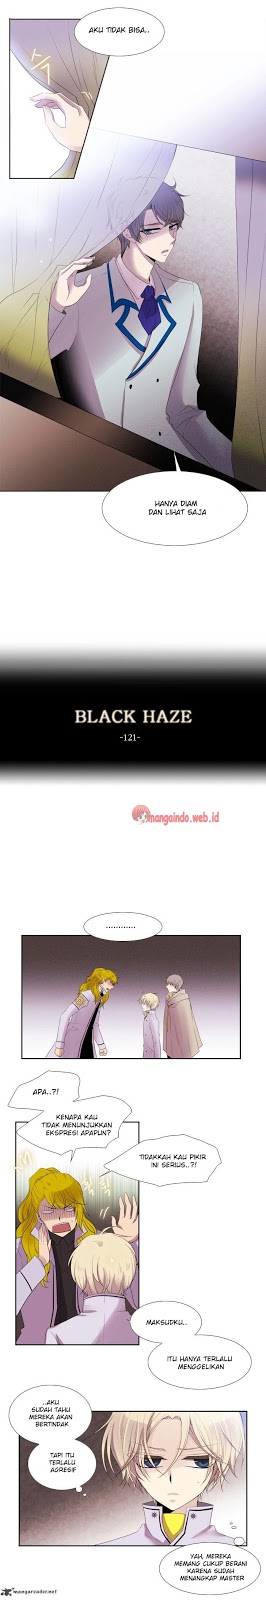 Black Haze: Chapter 121 - Page 1